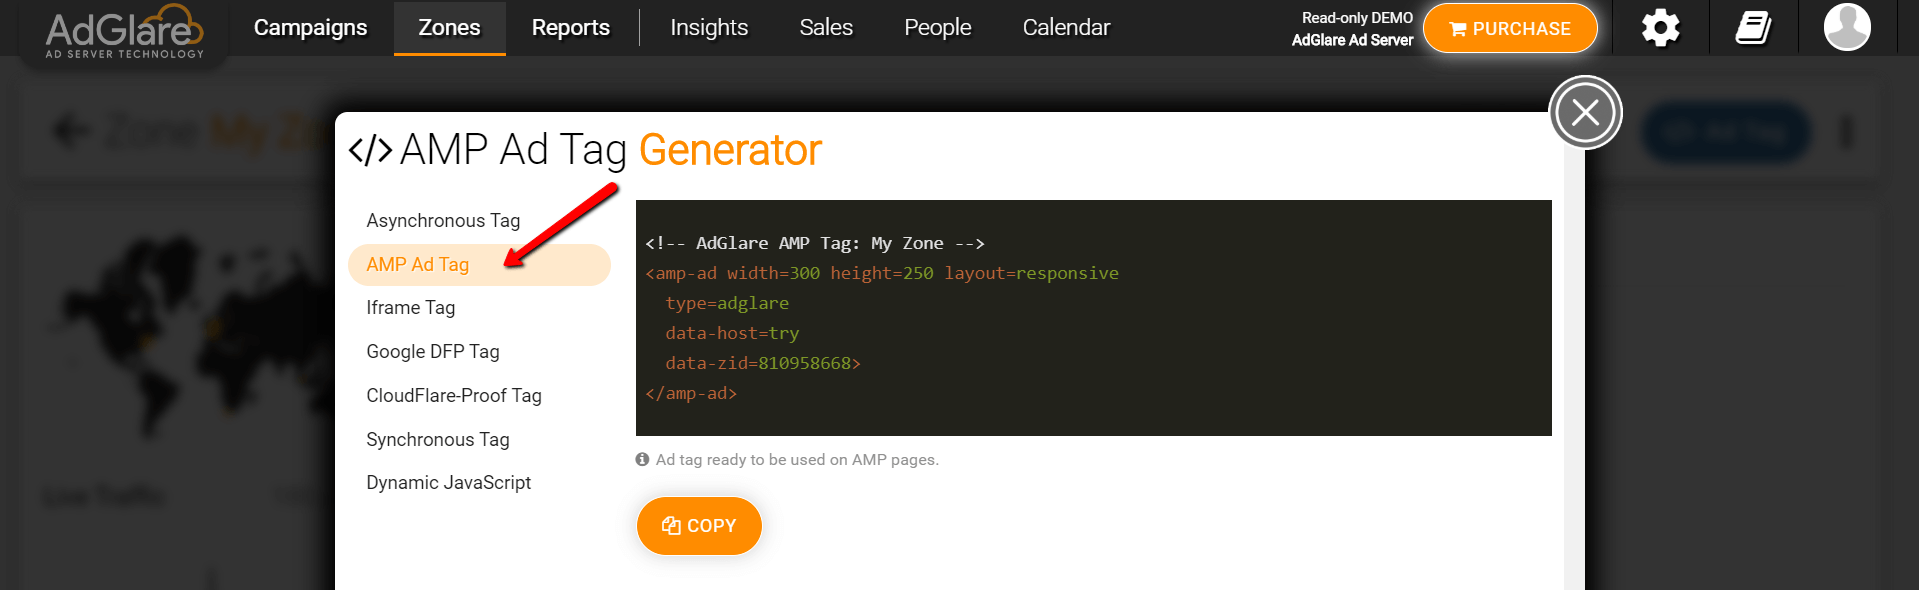 AMP HTML Ads - Ad Tag by AdGlare Ad Server